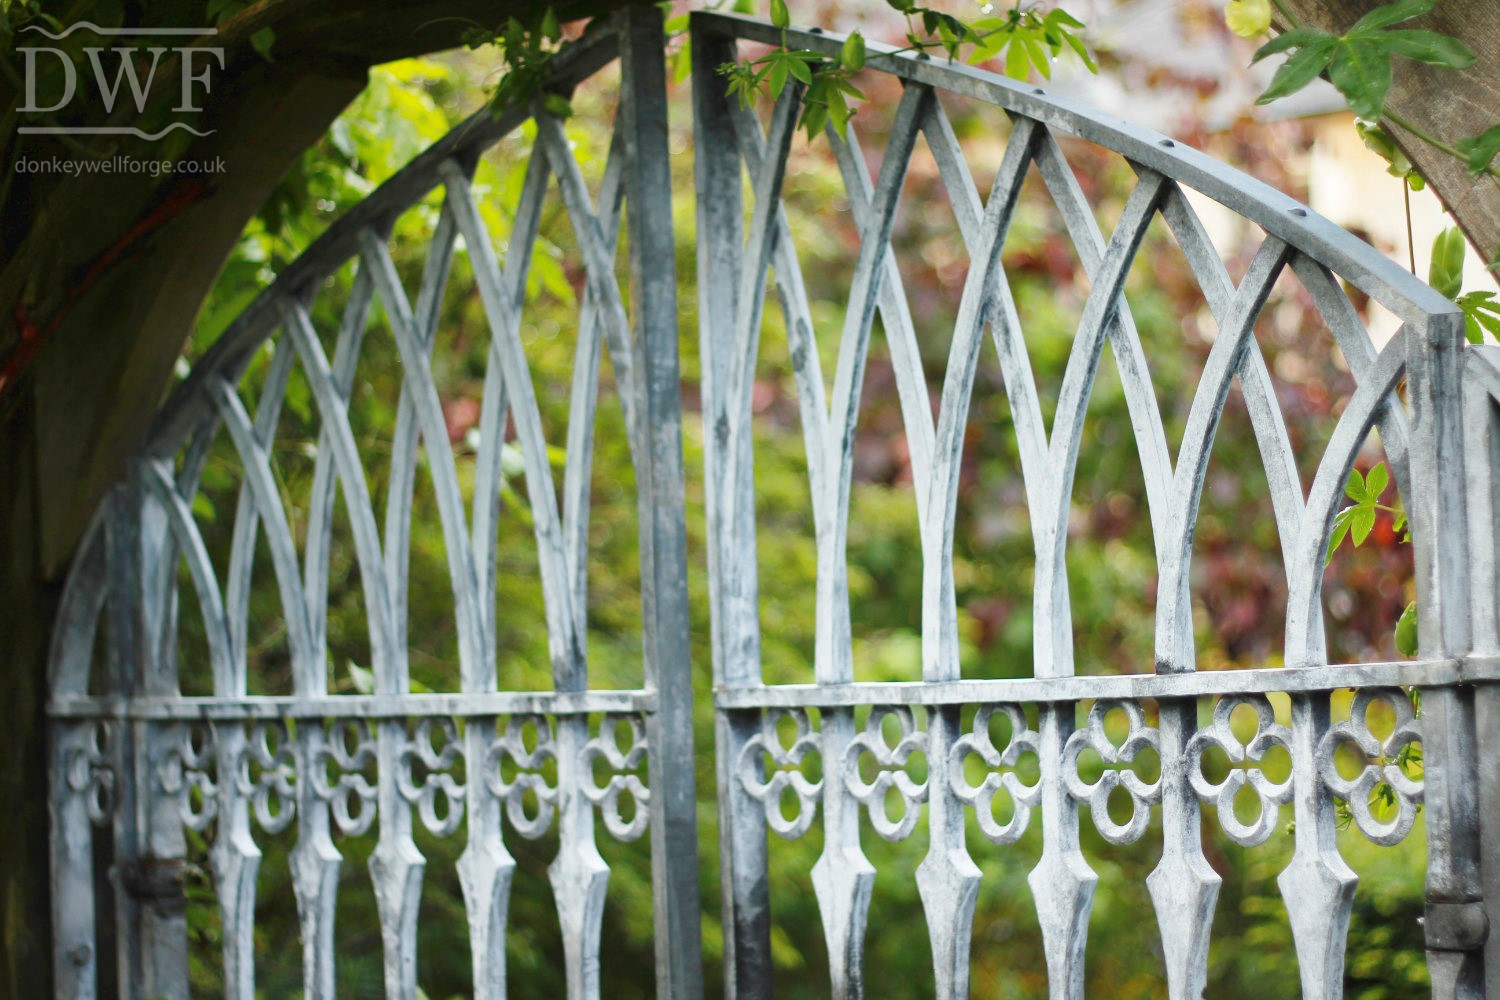 gothic-garden-railings-gates-traditional-ironwork-detail-rivited-lattice-bars-quatrefoils